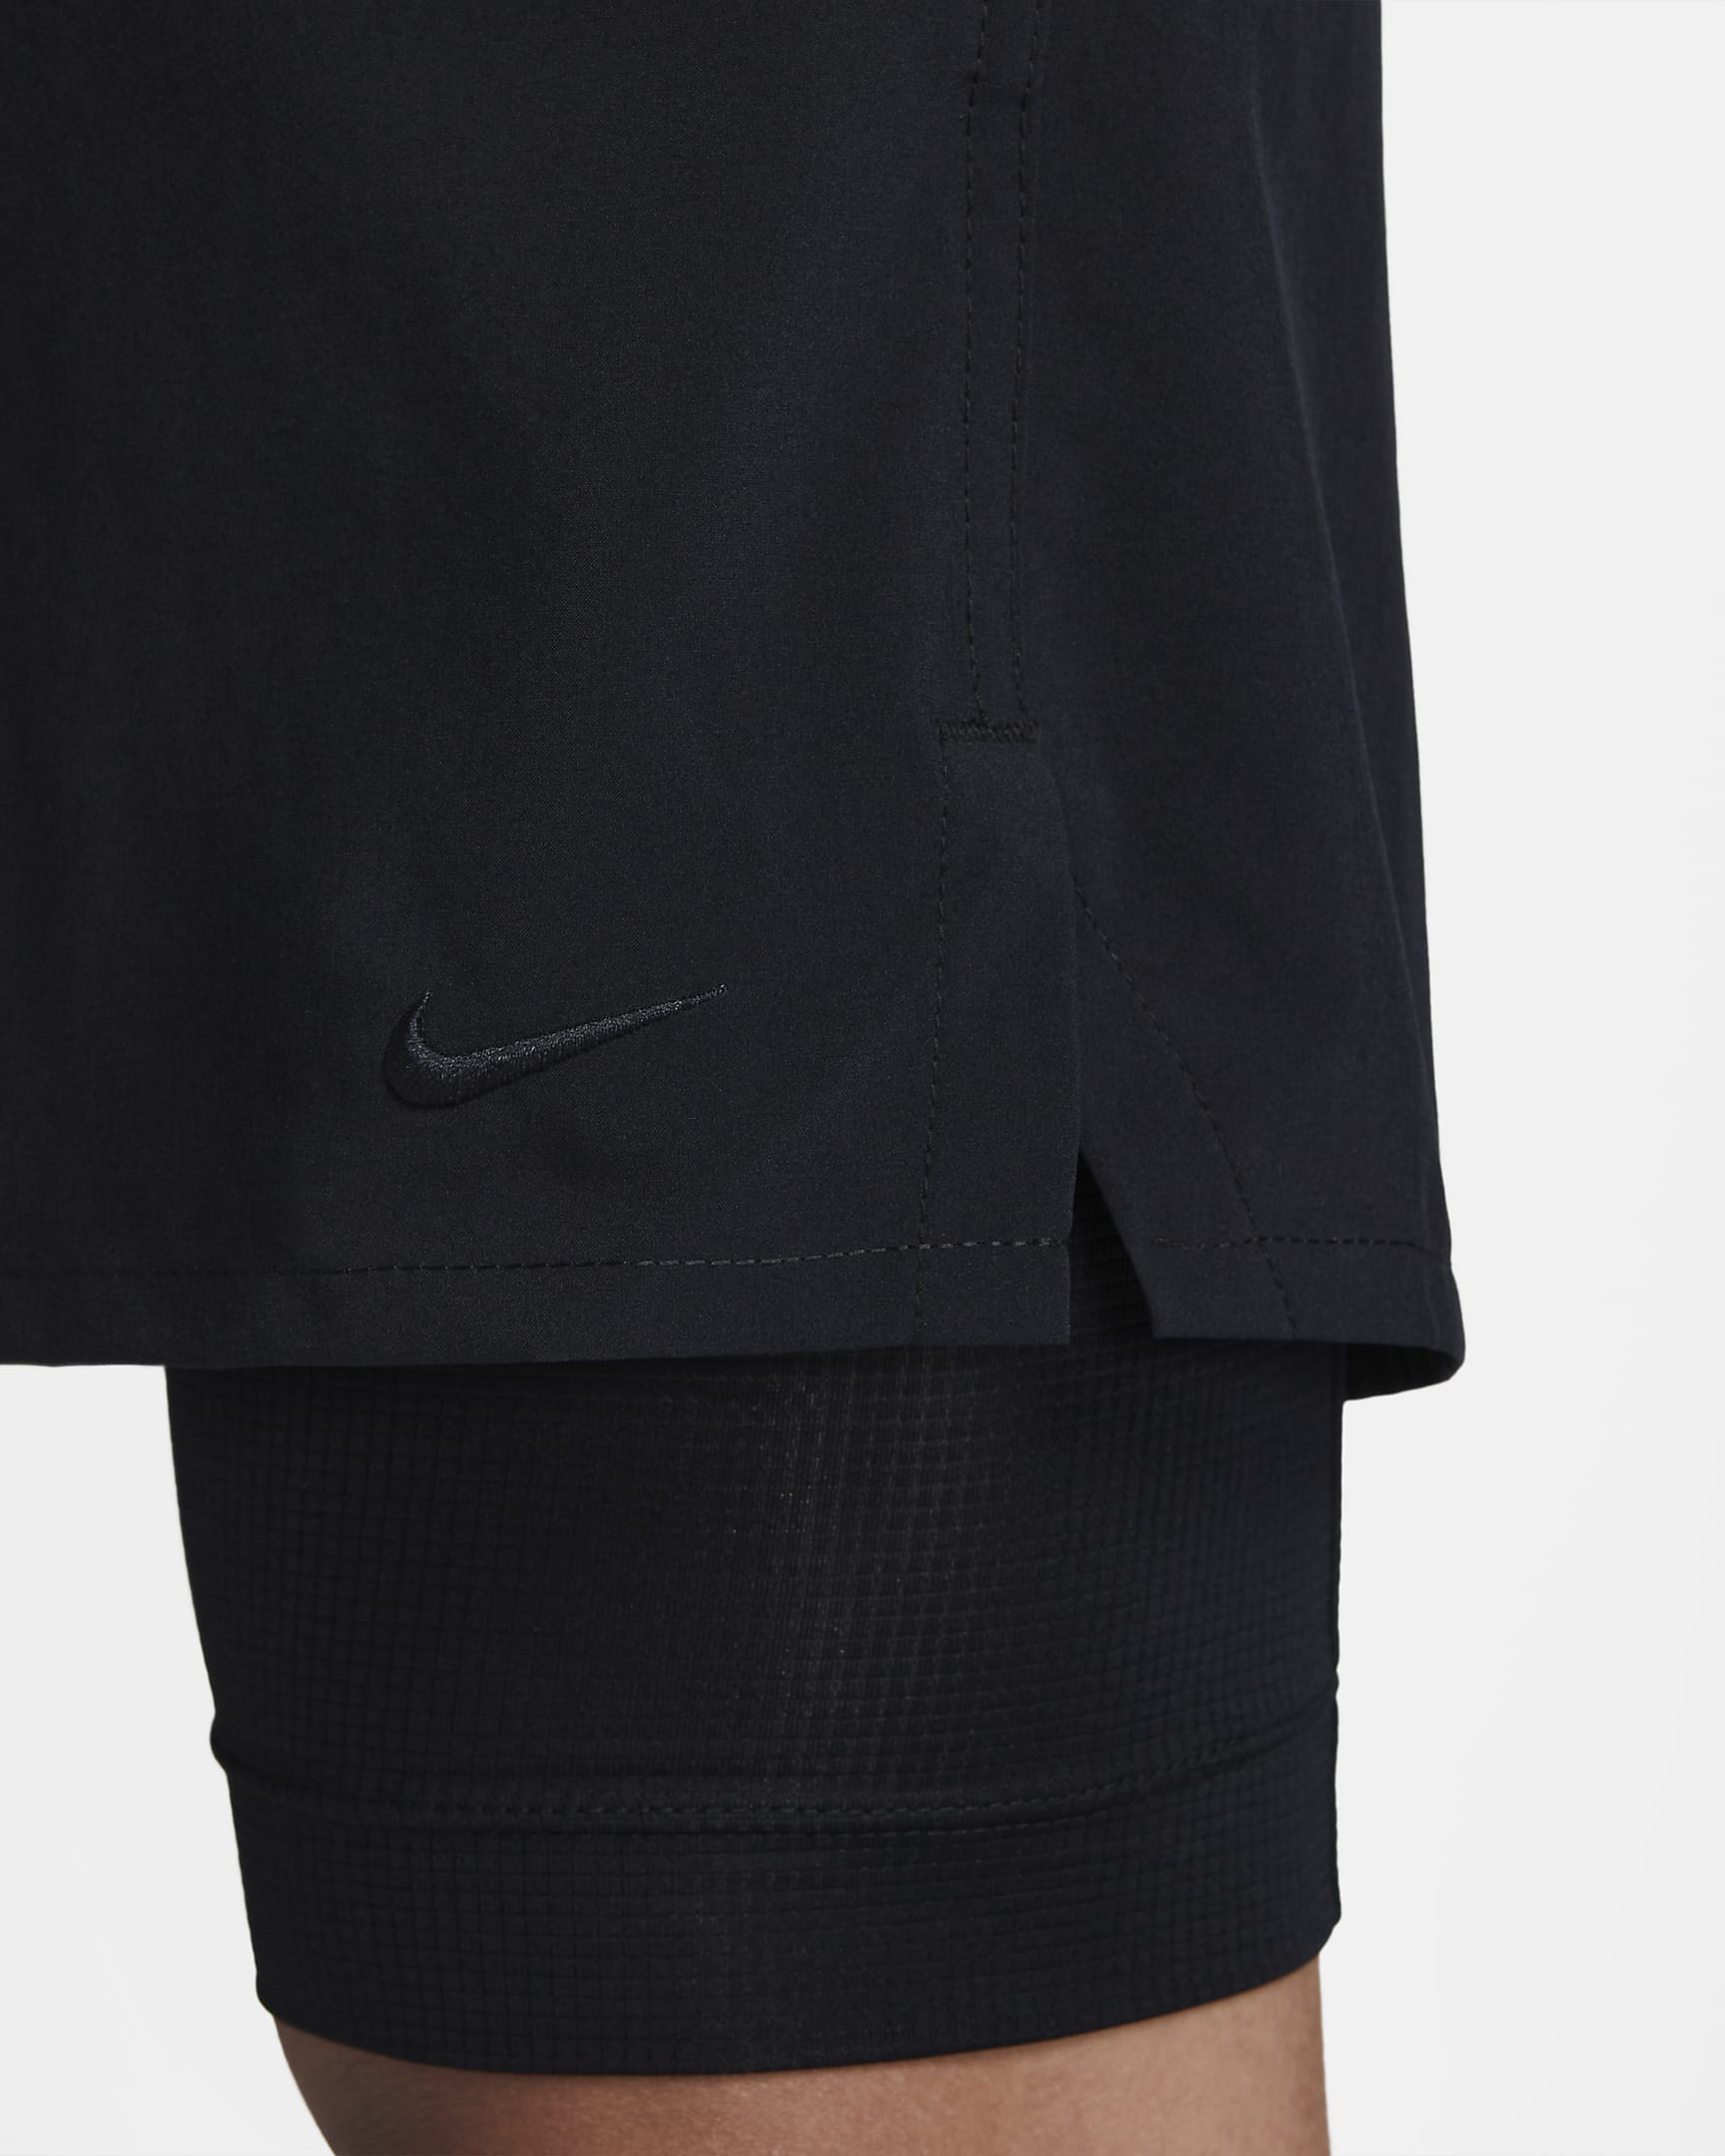 Nike Dri-FIT Unlimited Men's 18cm (approx.) 2-in-1 Versatile Shorts ...